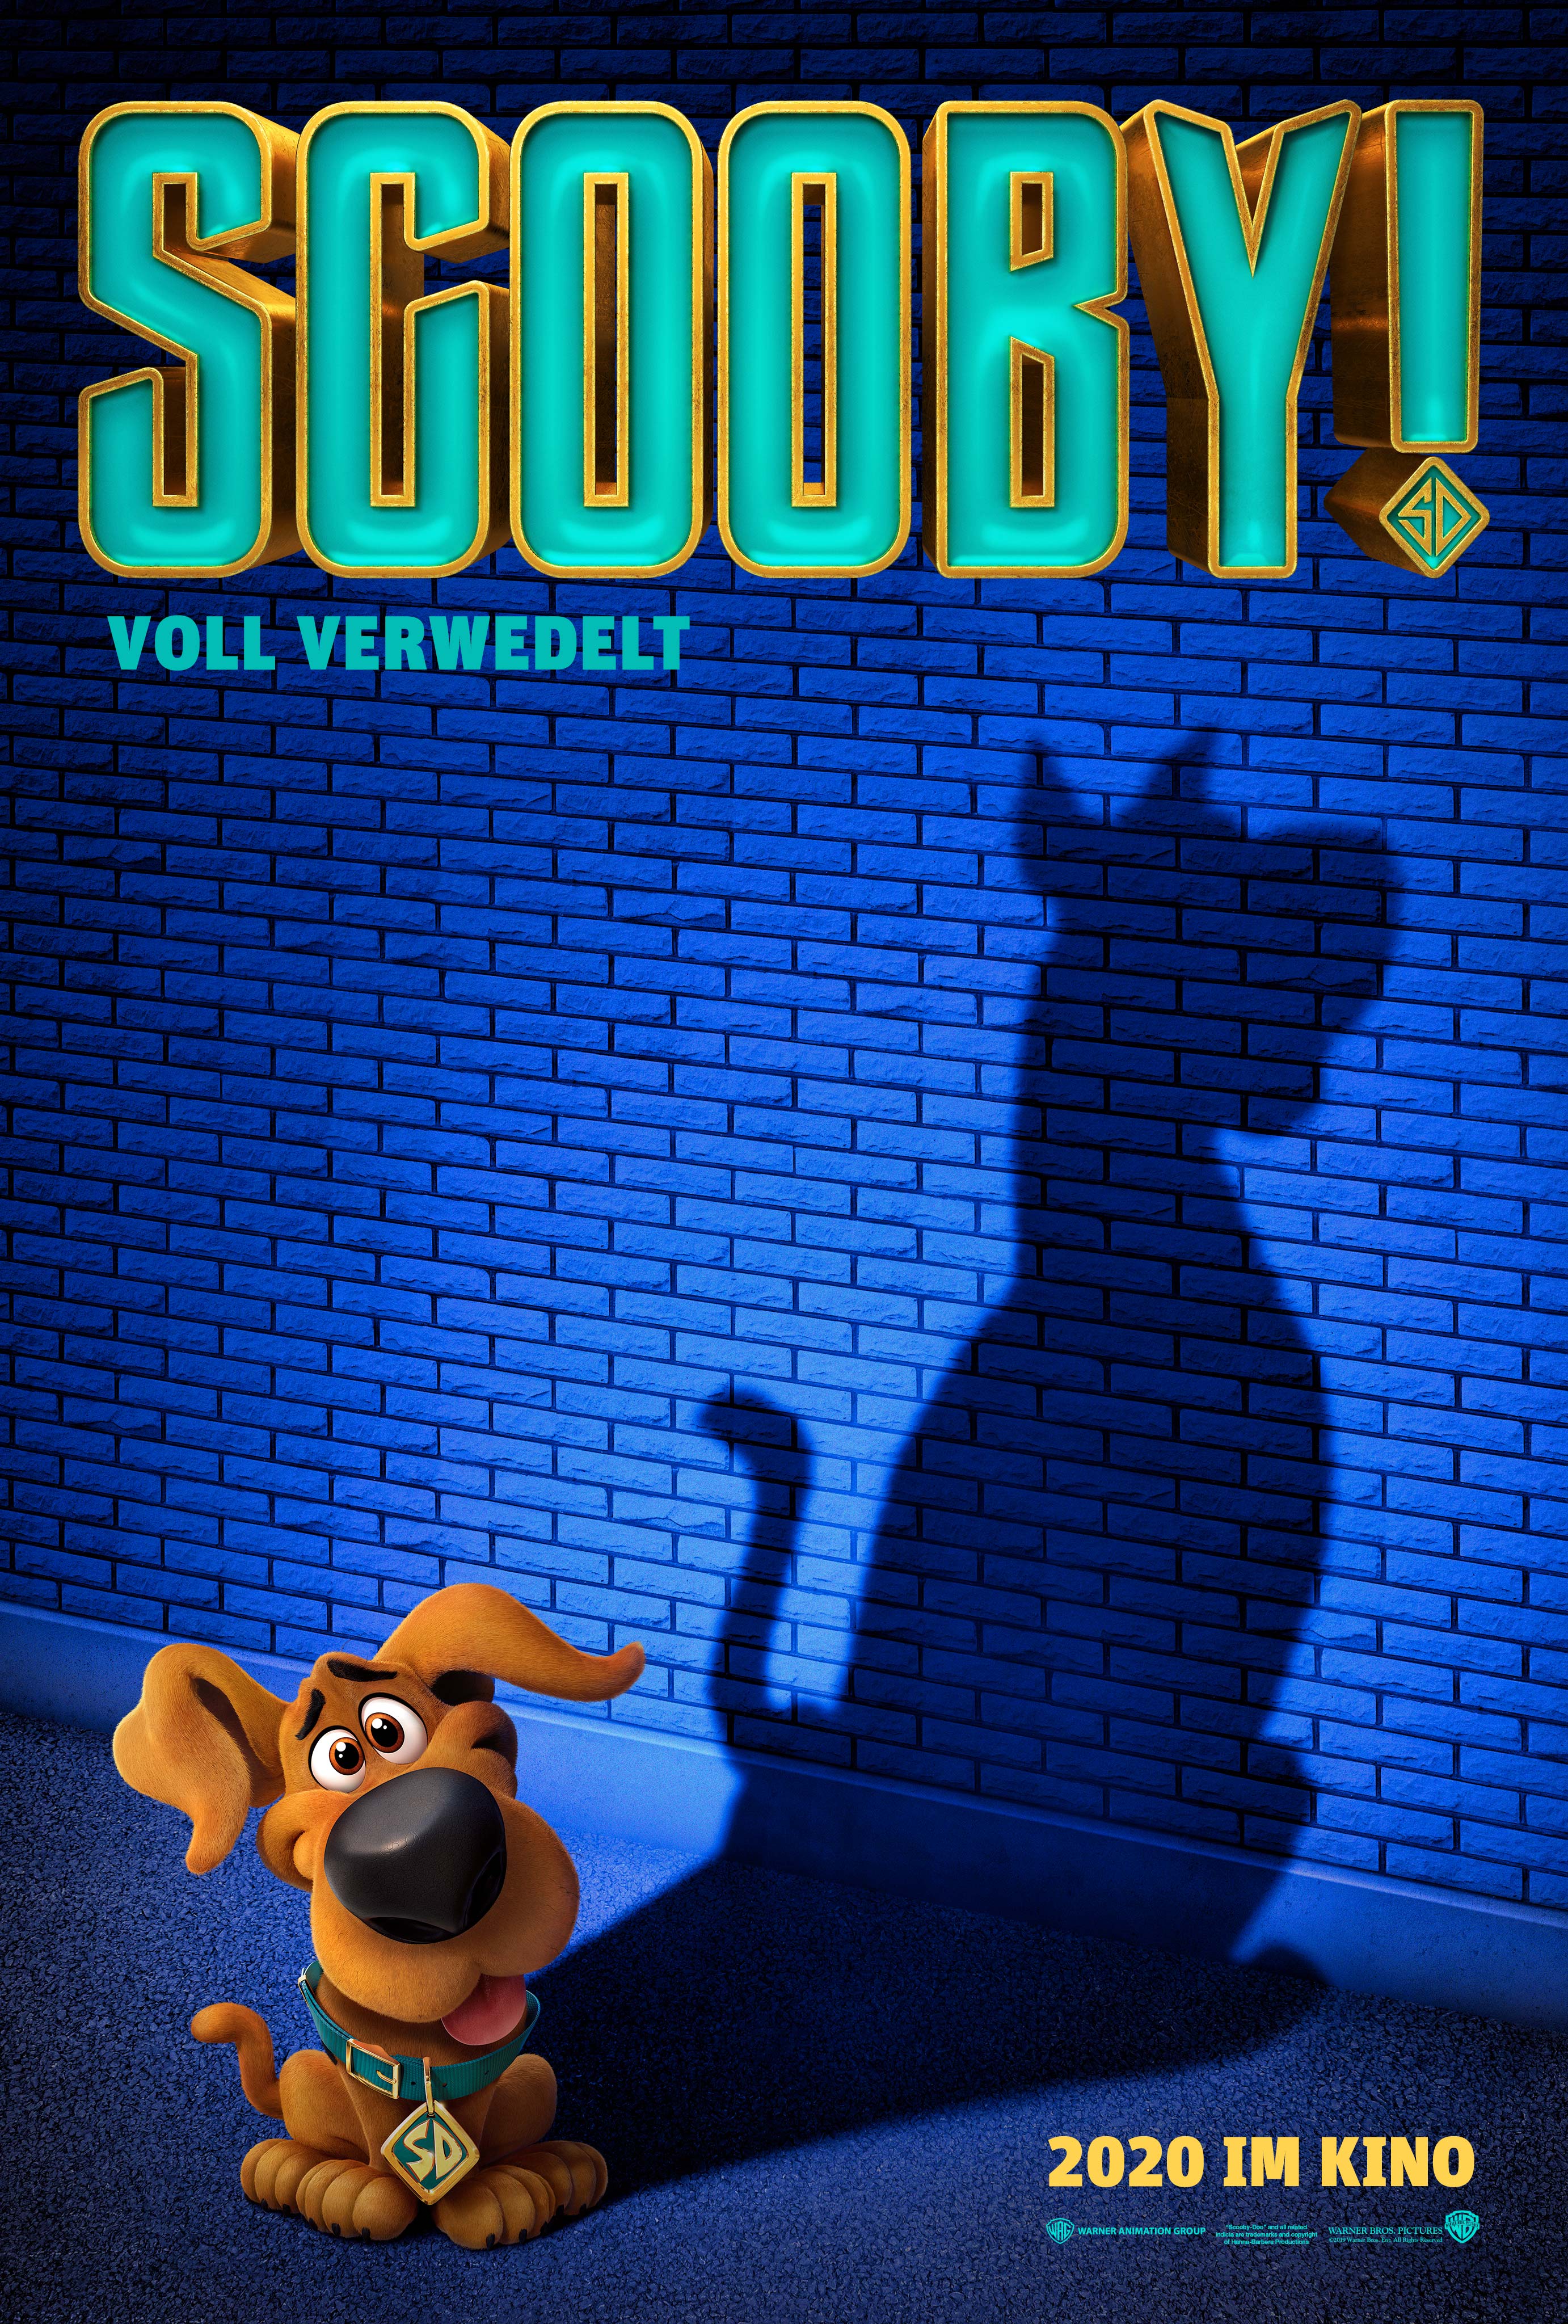 Animationfilm-Scooby-Doo : Best Scooby Doo Movies List ...